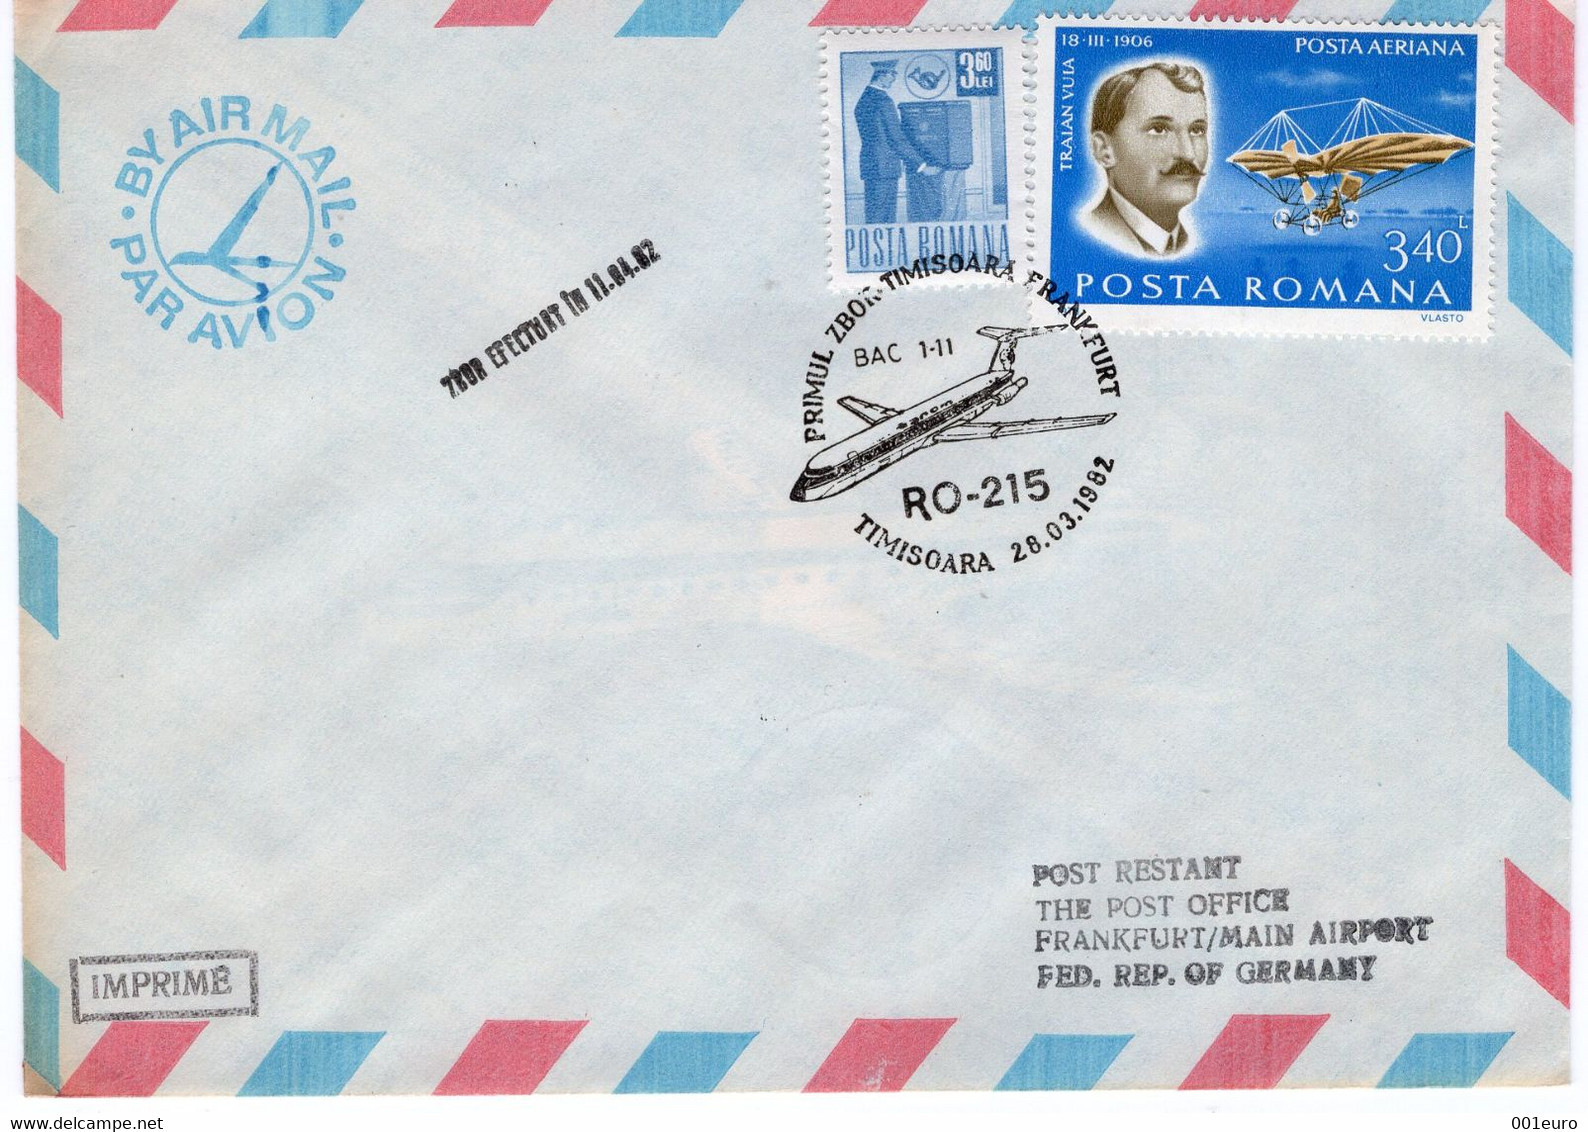 ROMANIA 1982: AEROPHILATELY - FLIGHT TIMISOARA - FRANKFURT, Illustrated Postmark On Cover  - Registered Shipping! - Marcofilia